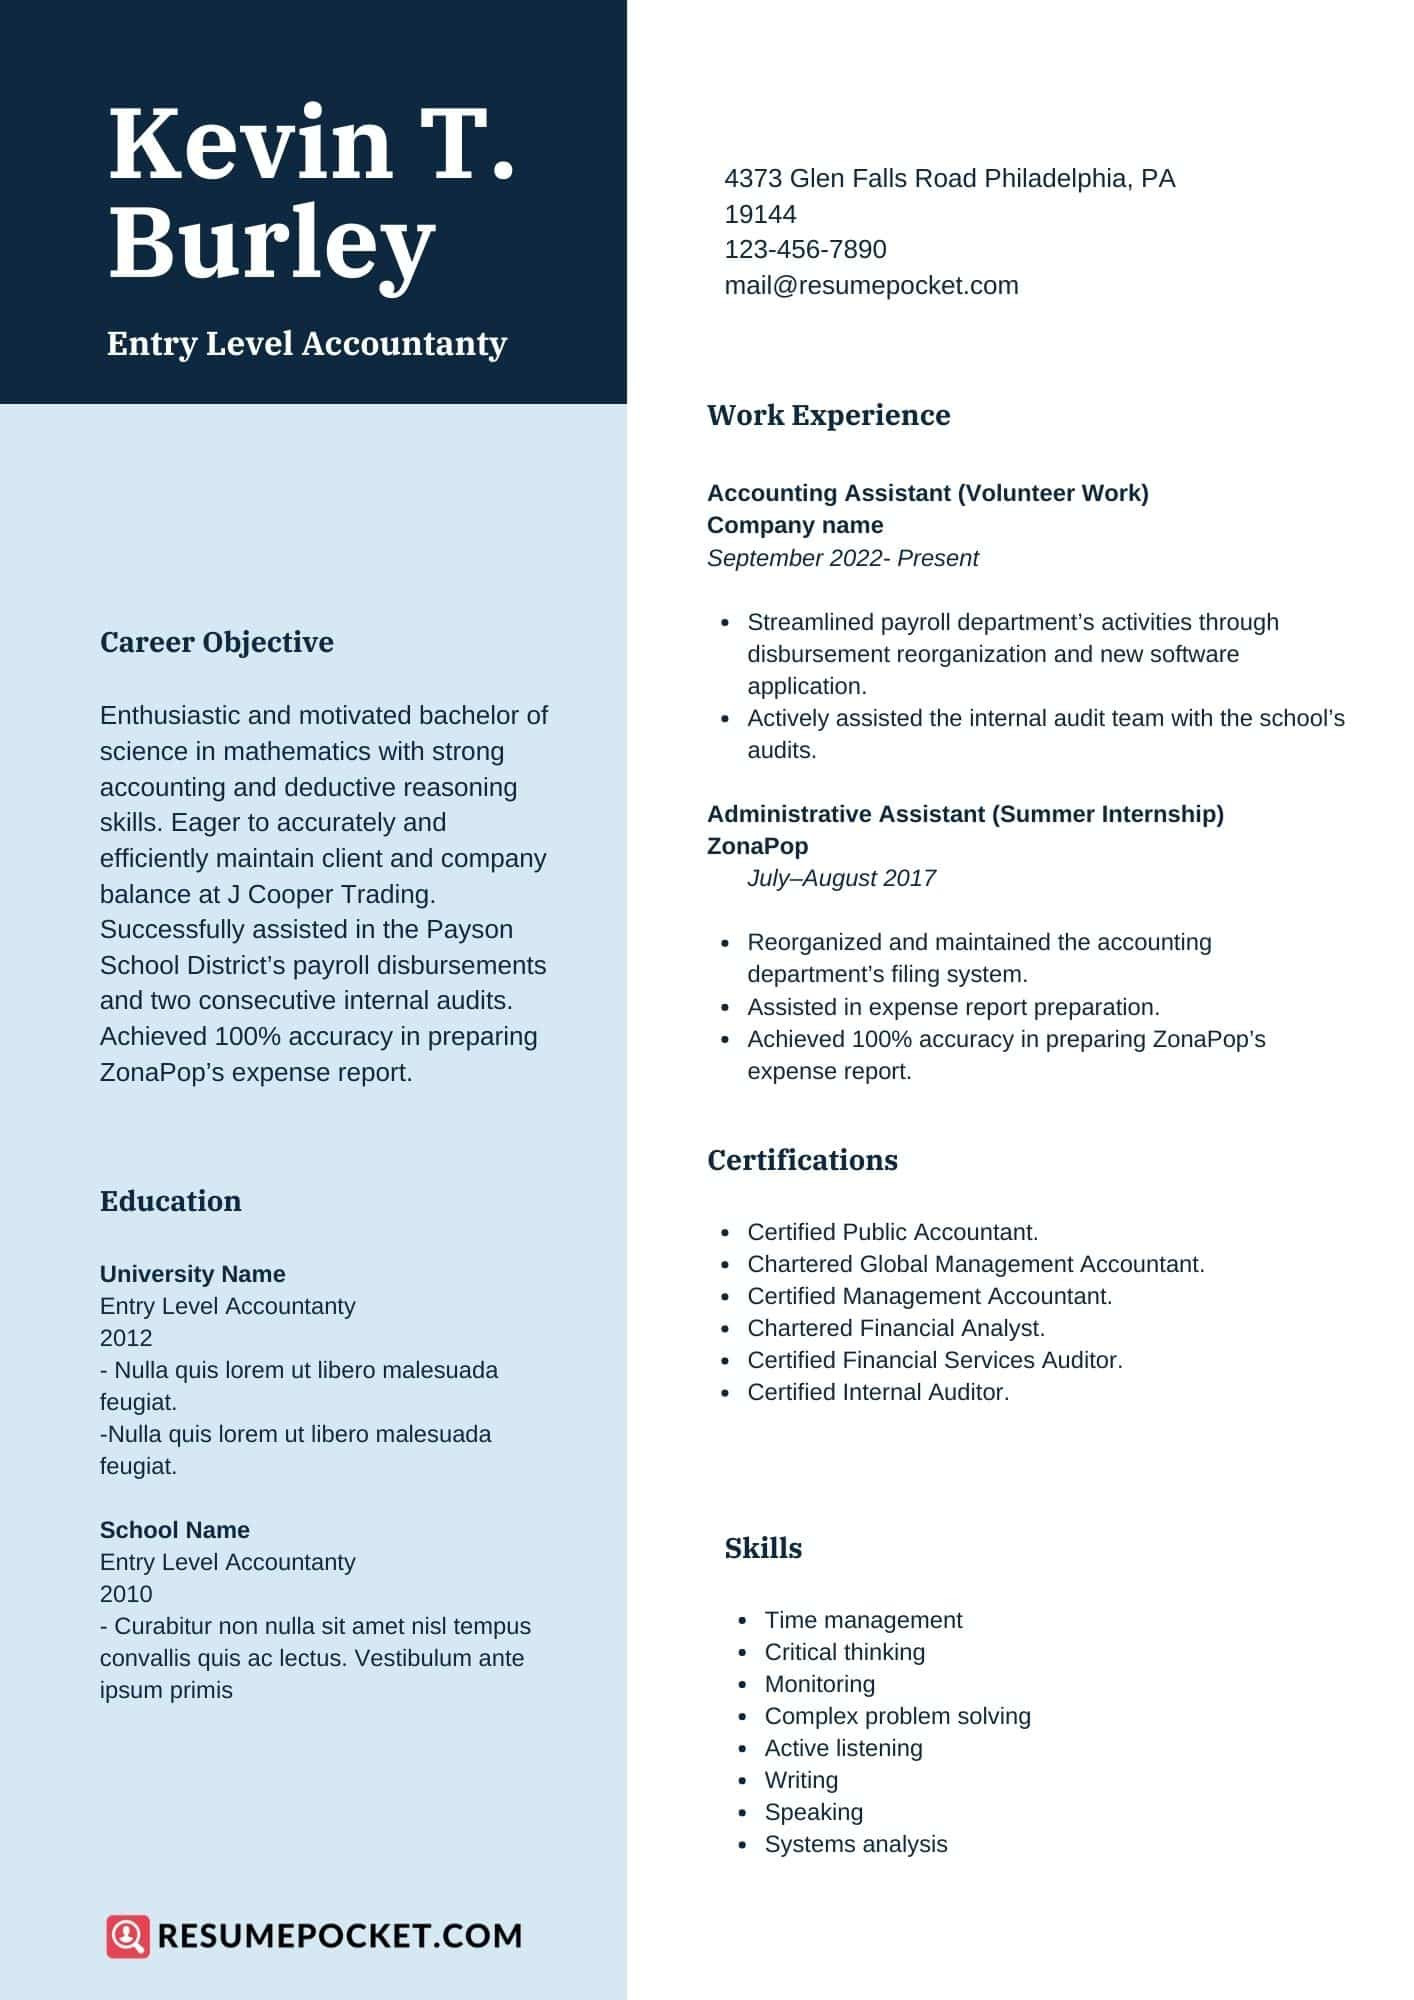 Sample Resume Objectives for Entry Level Finance Entry Level Accountant Resume Samples – Resumepocket